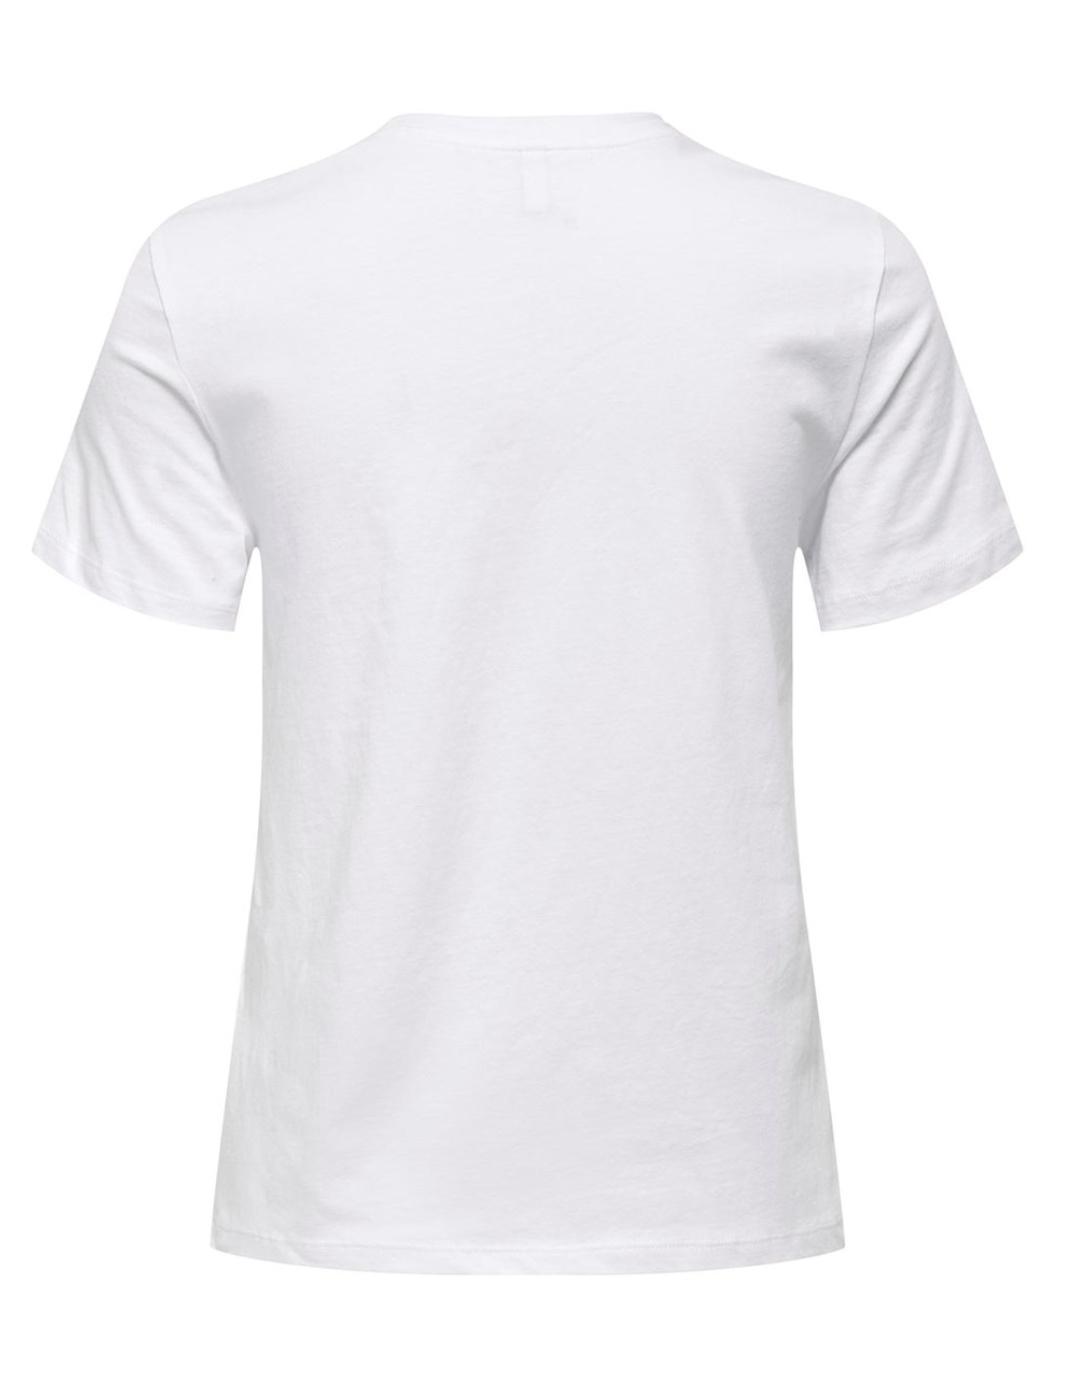 Camiseta Only Polly blanco holgada manga corta para mujer